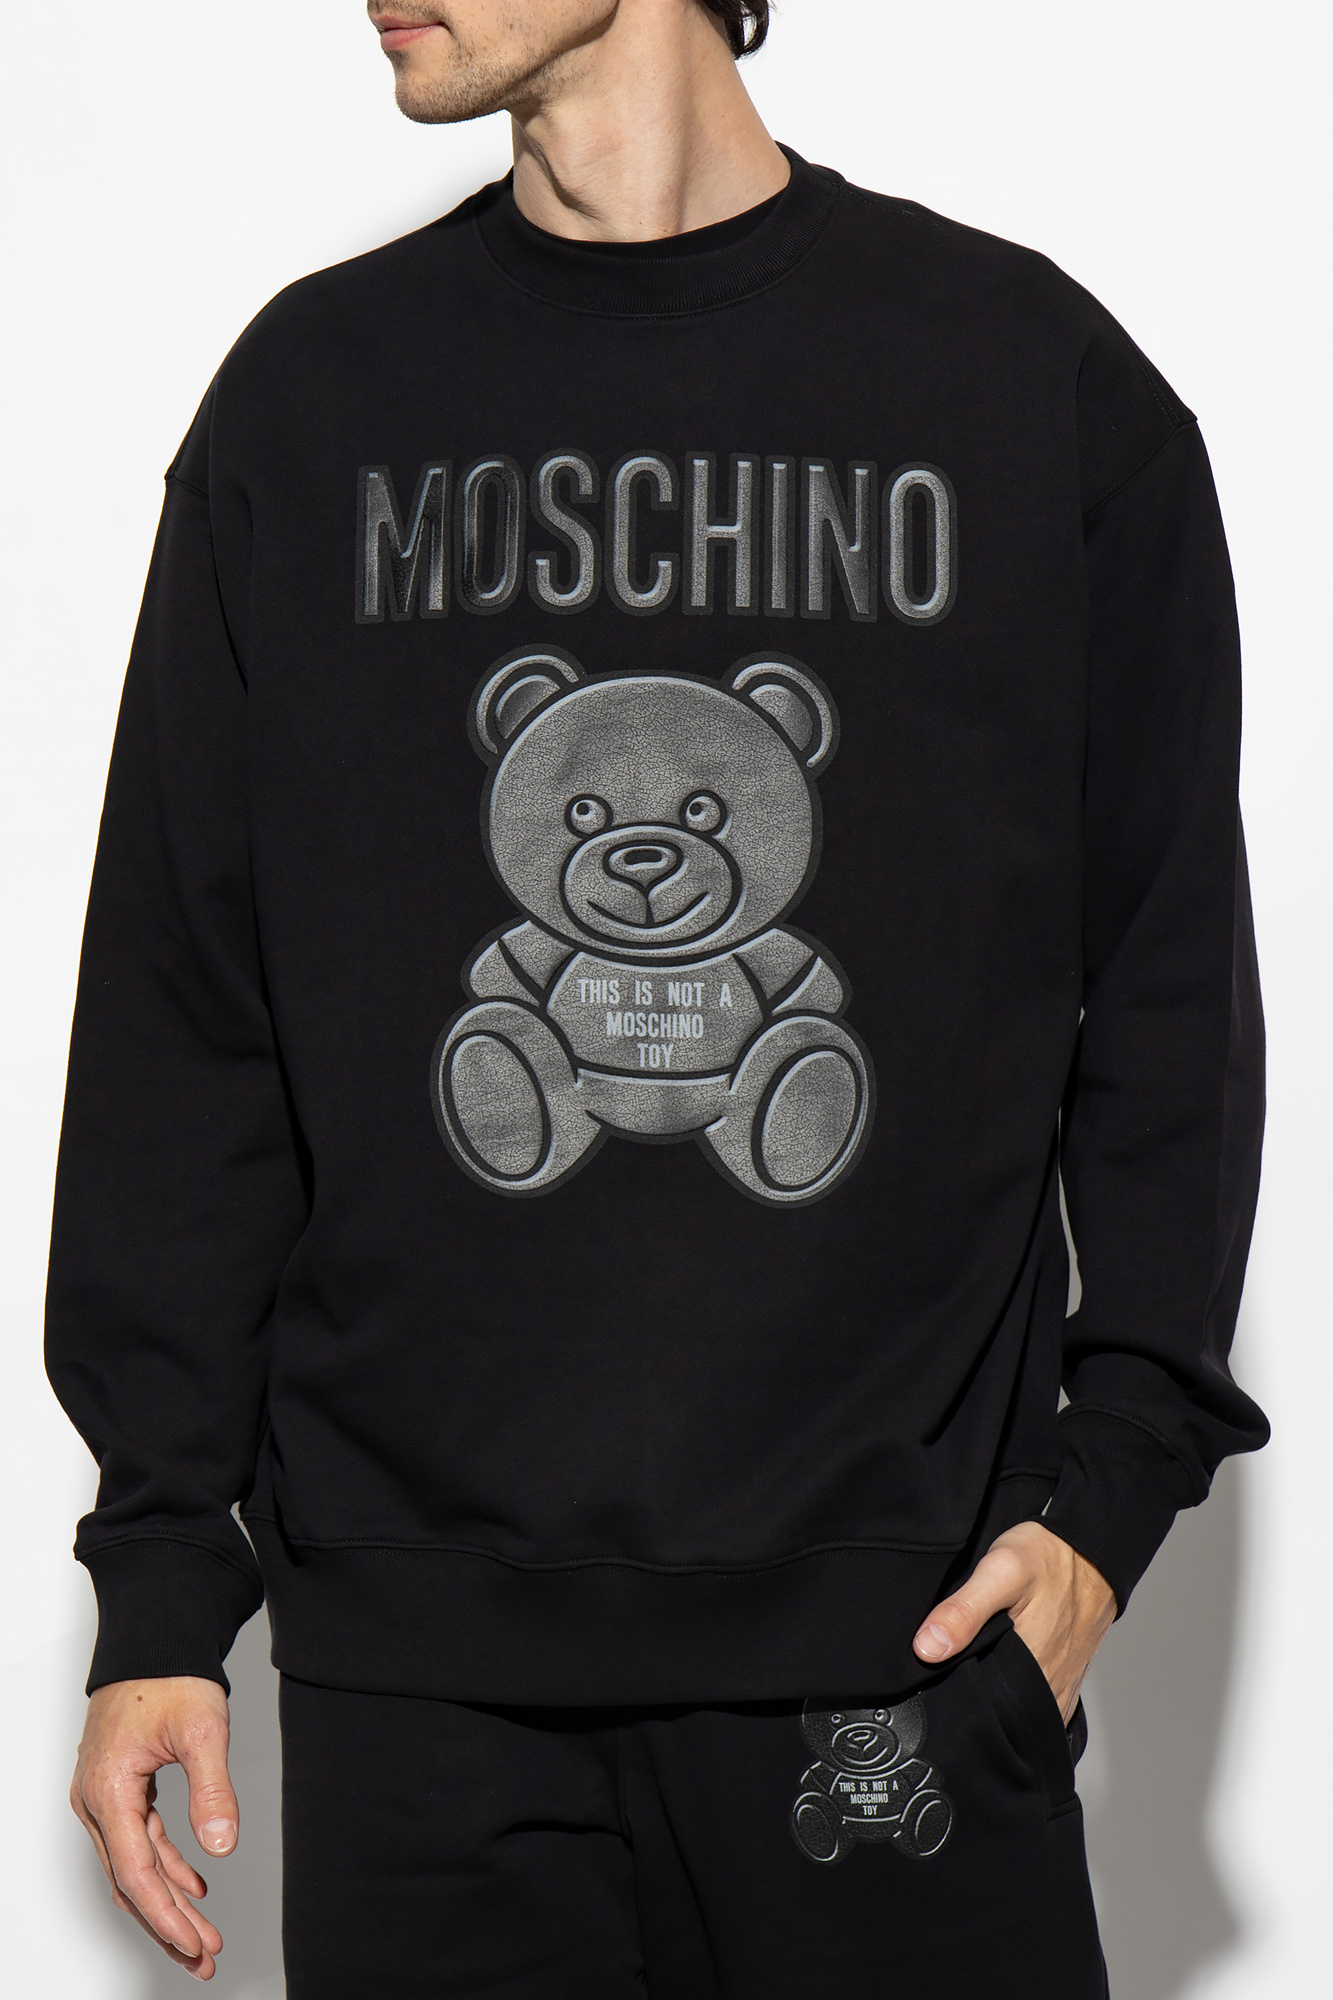 Black Sweatshirt with logo Moschino - Vitkac Australia